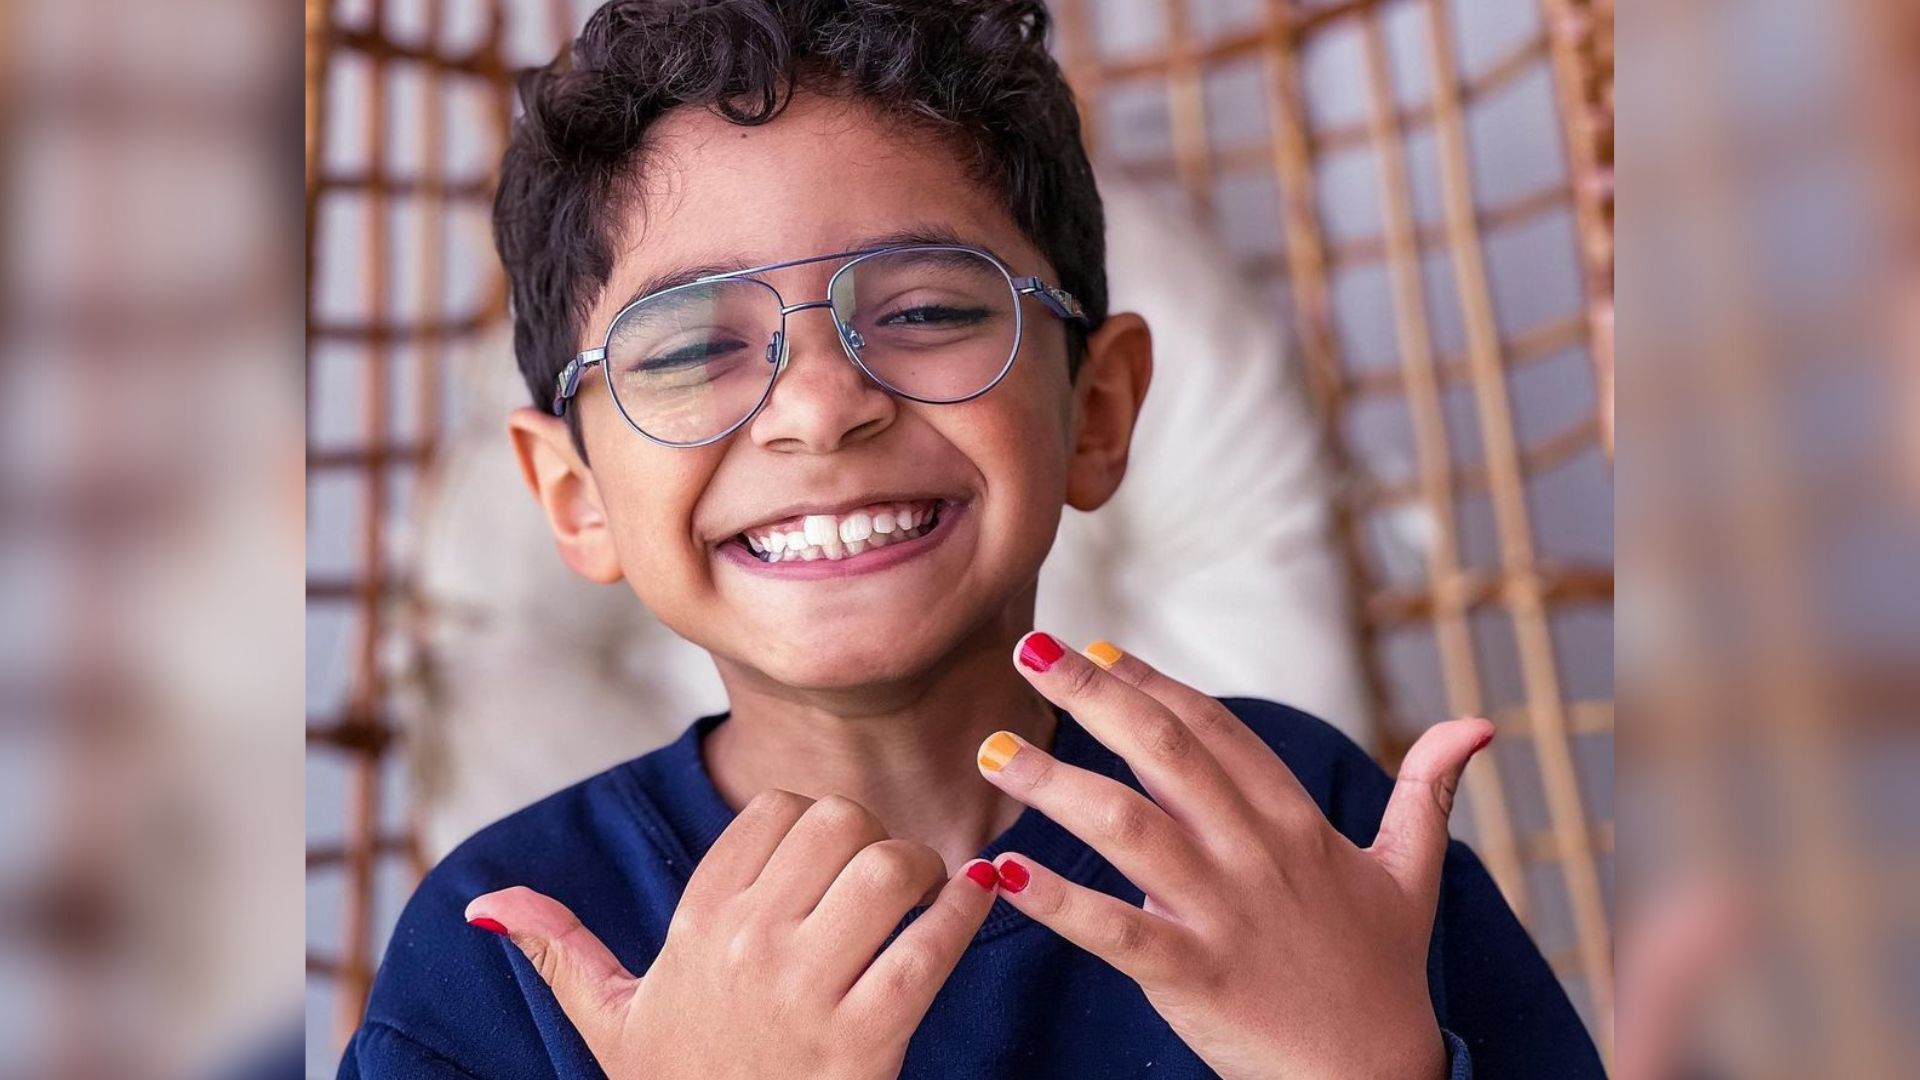 Pais atendem pedido de filho de 8 anos para pintar as unhas e